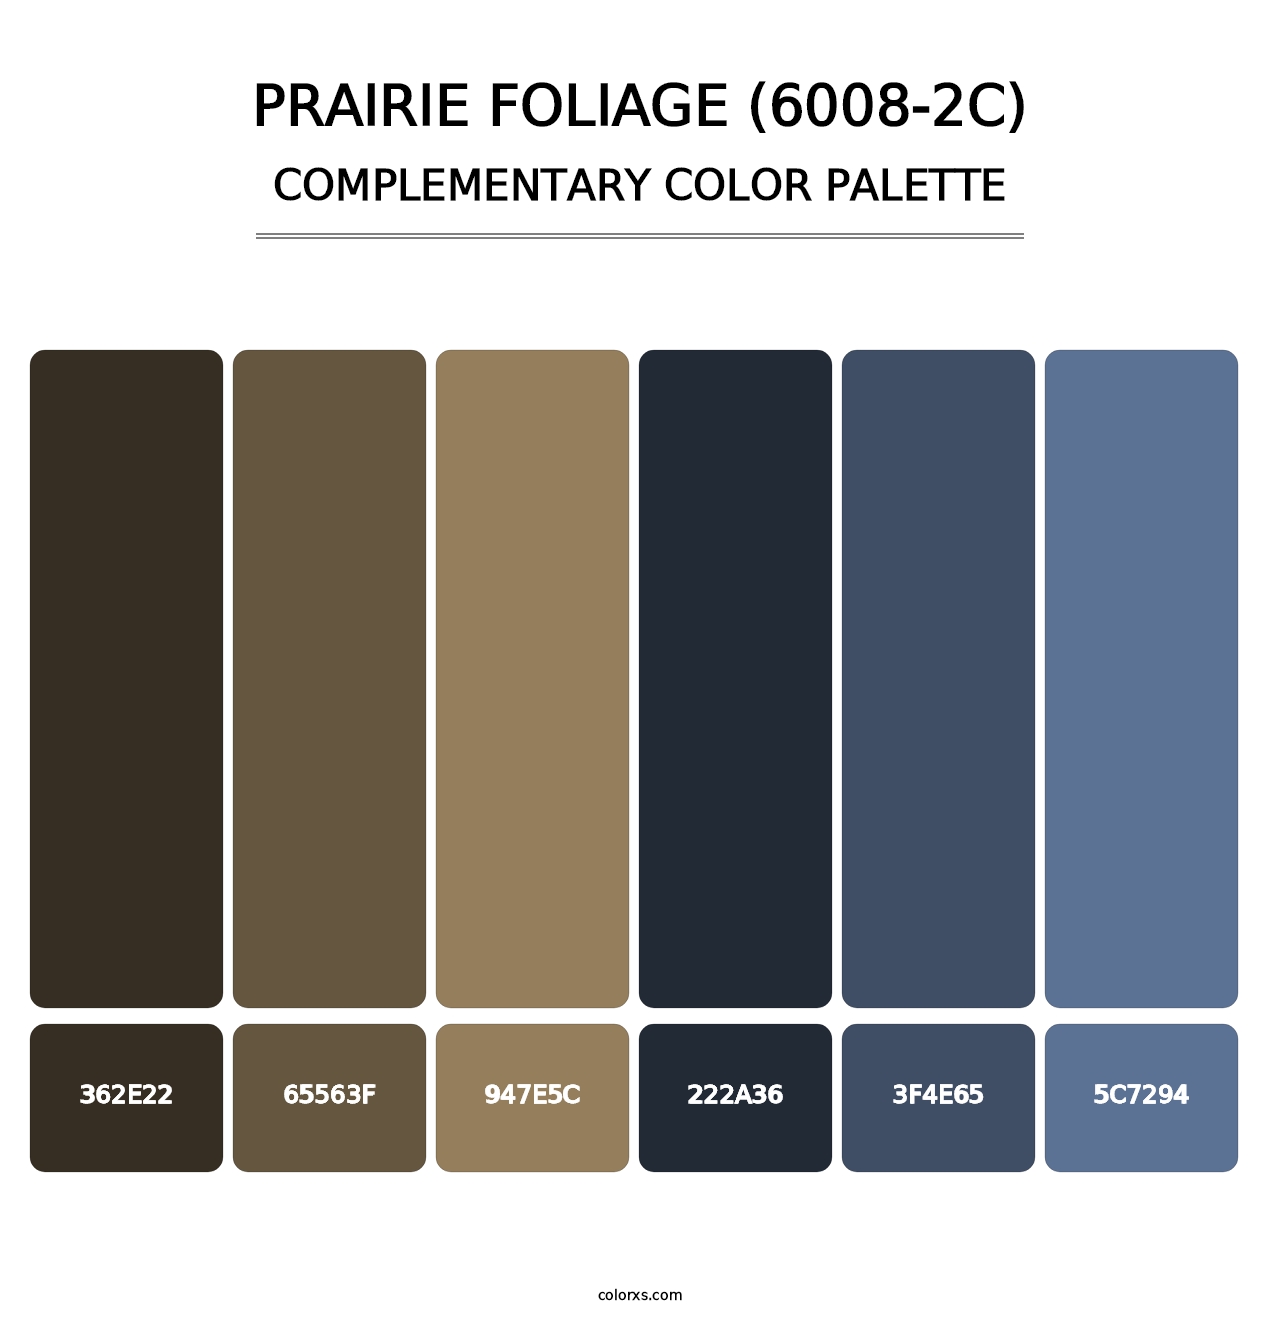 Prairie Foliage (6008-2C) - Complementary Color Palette